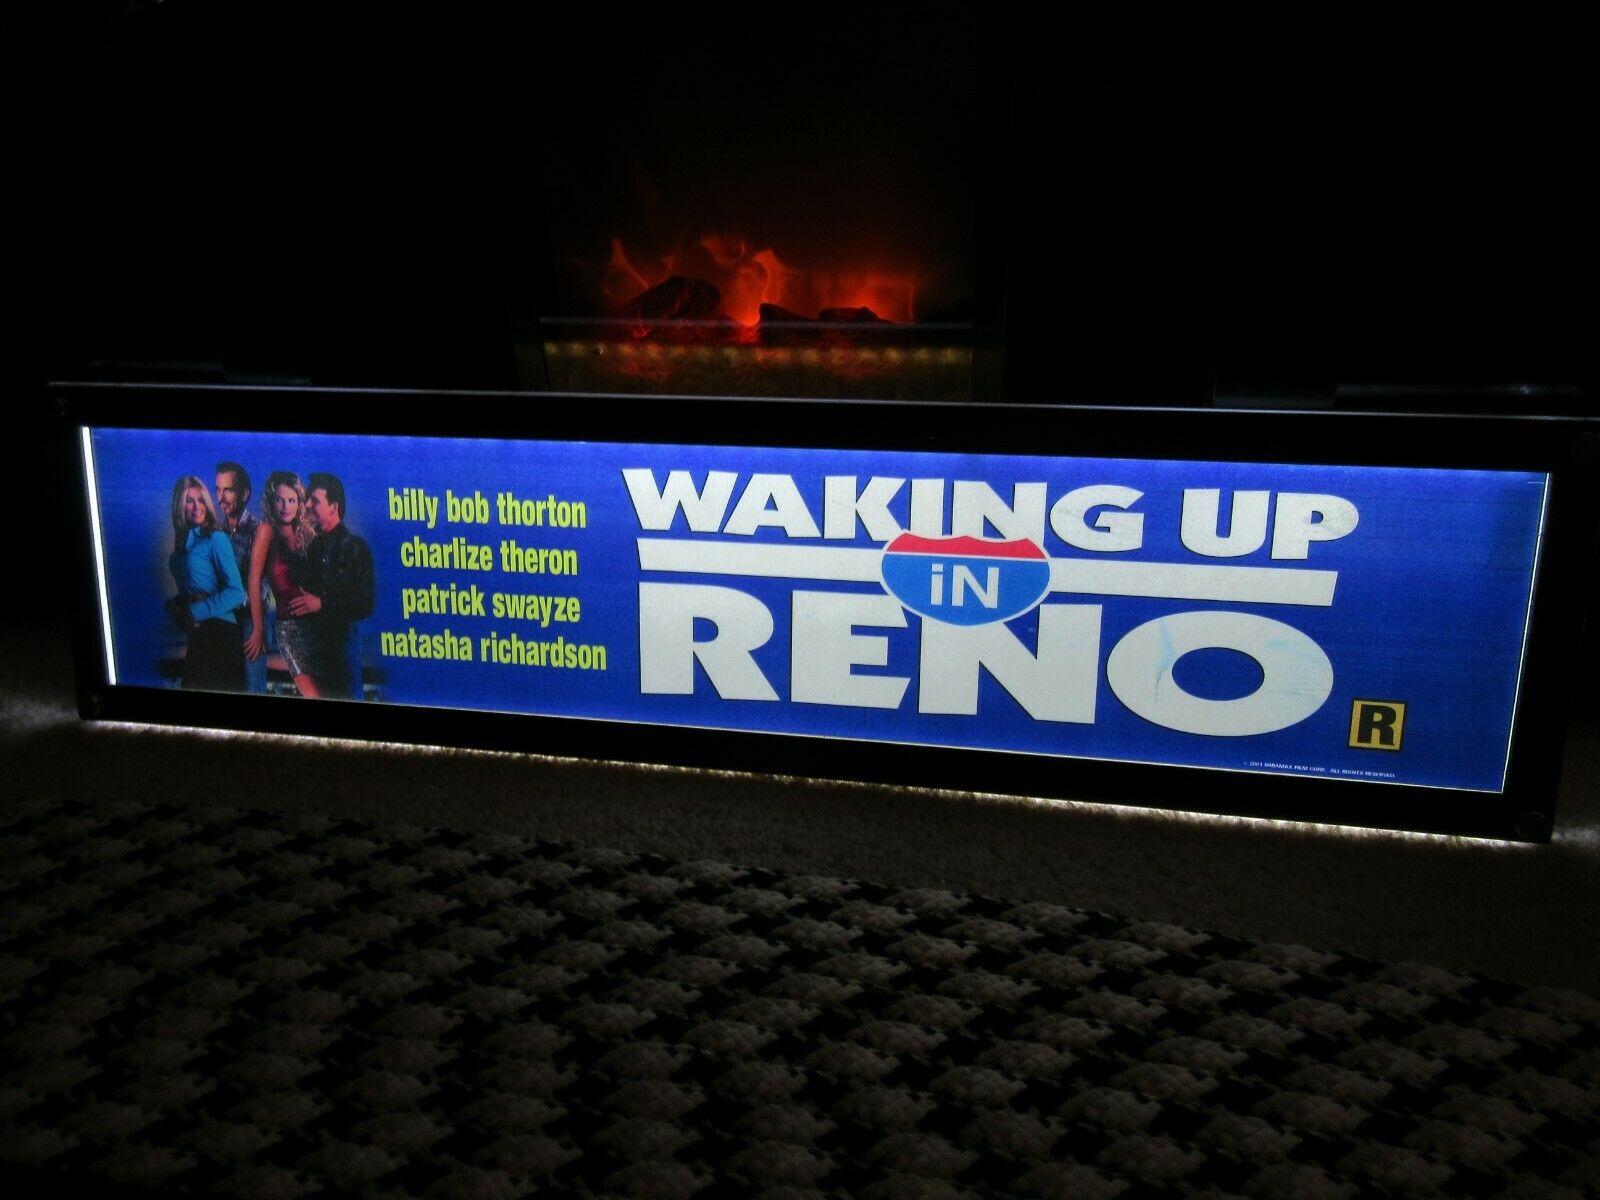 Waking Up In Reno [2001] 5x25 [large] S/s [original] Movie Poster [mylar] [rare]